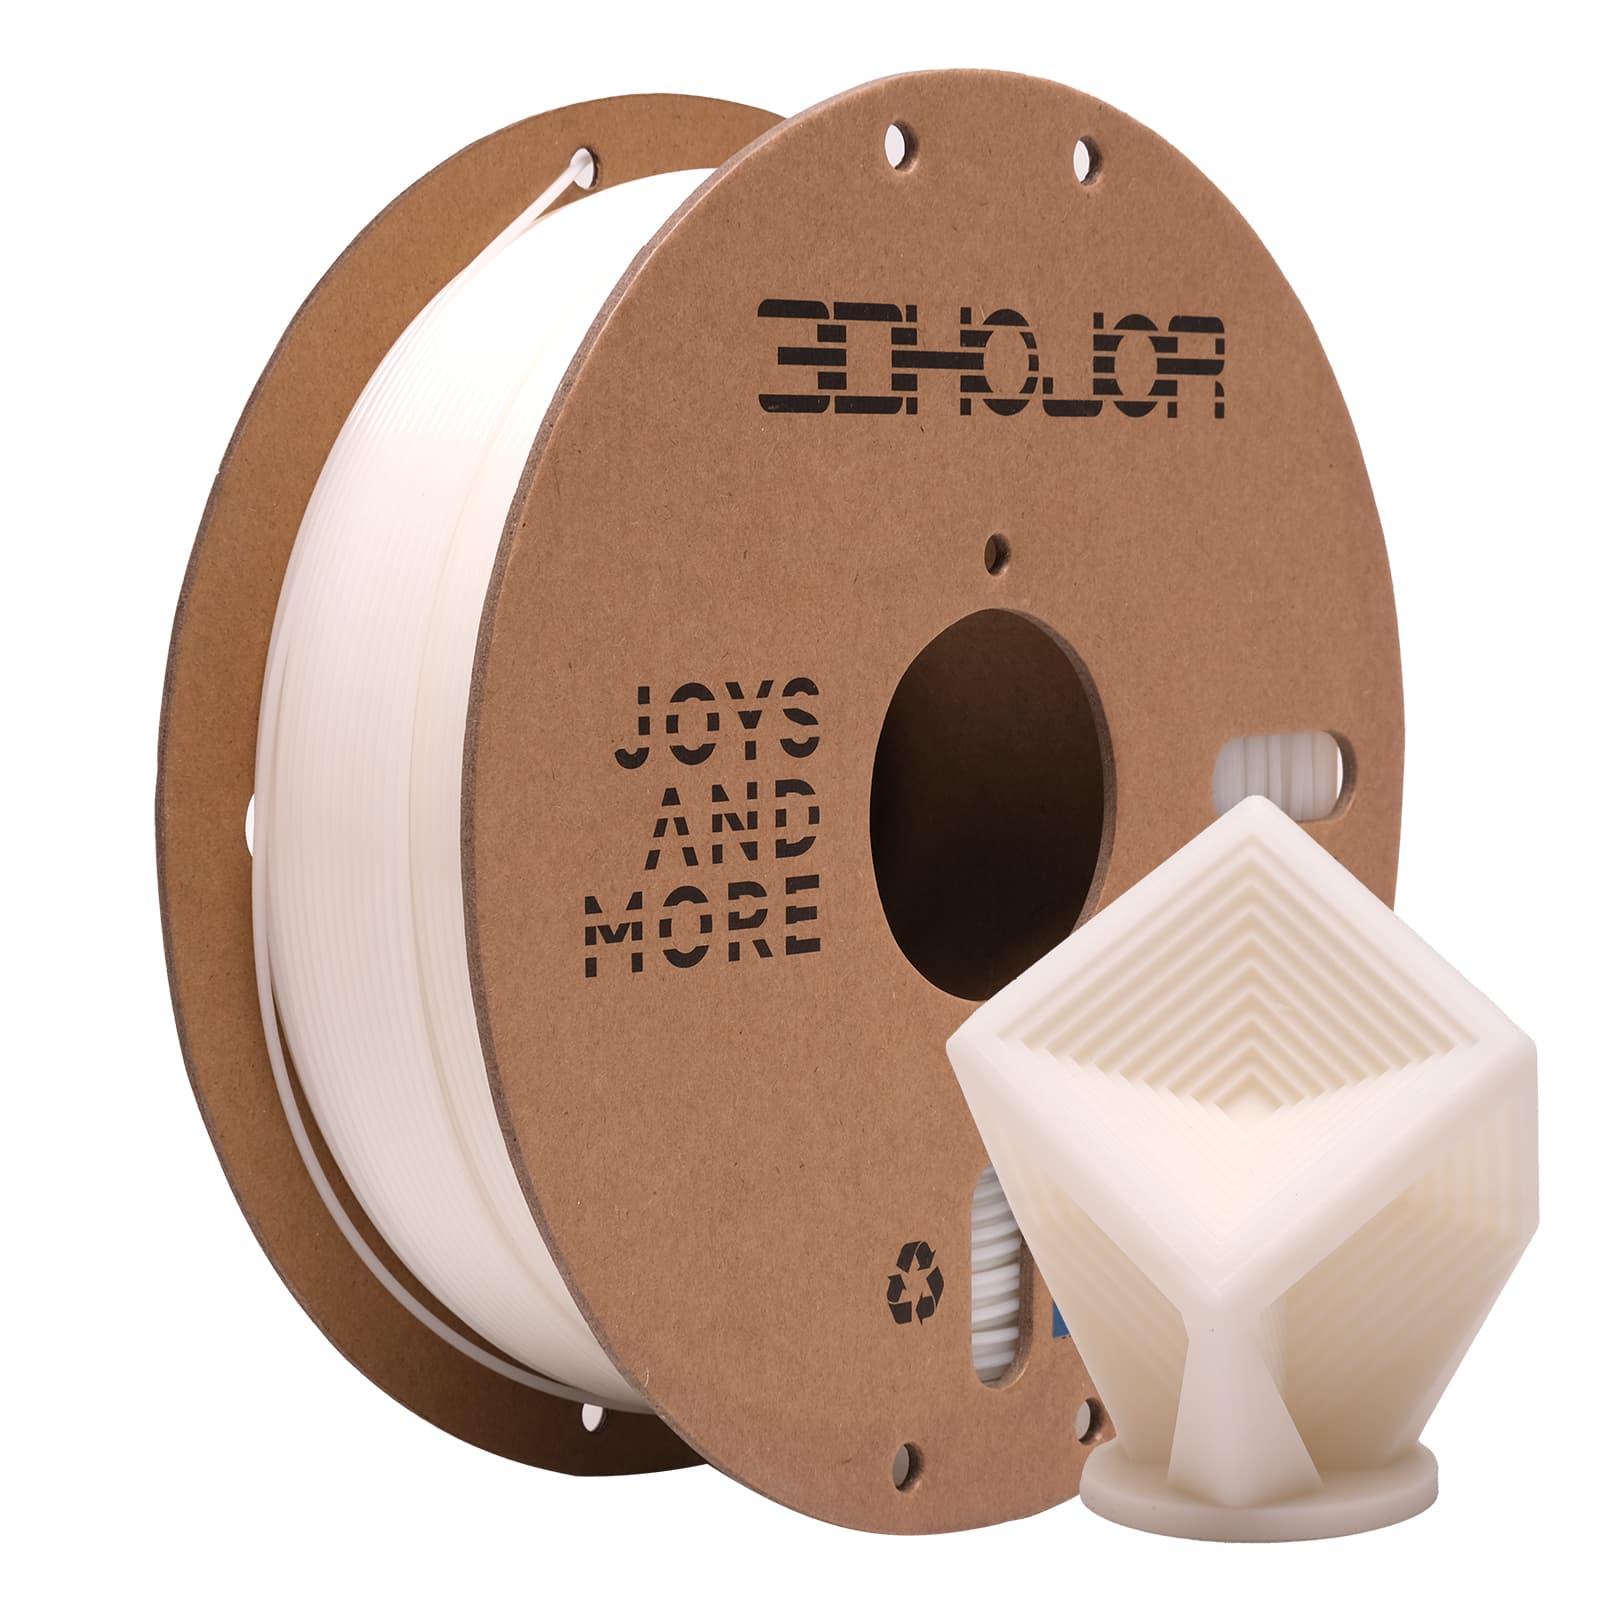 3DHoJor PLA Filament 1.75mm White,3D Printing Filament,1kg Cardboard Spool (2.2lbs), Fit Most FDM 3D Printer